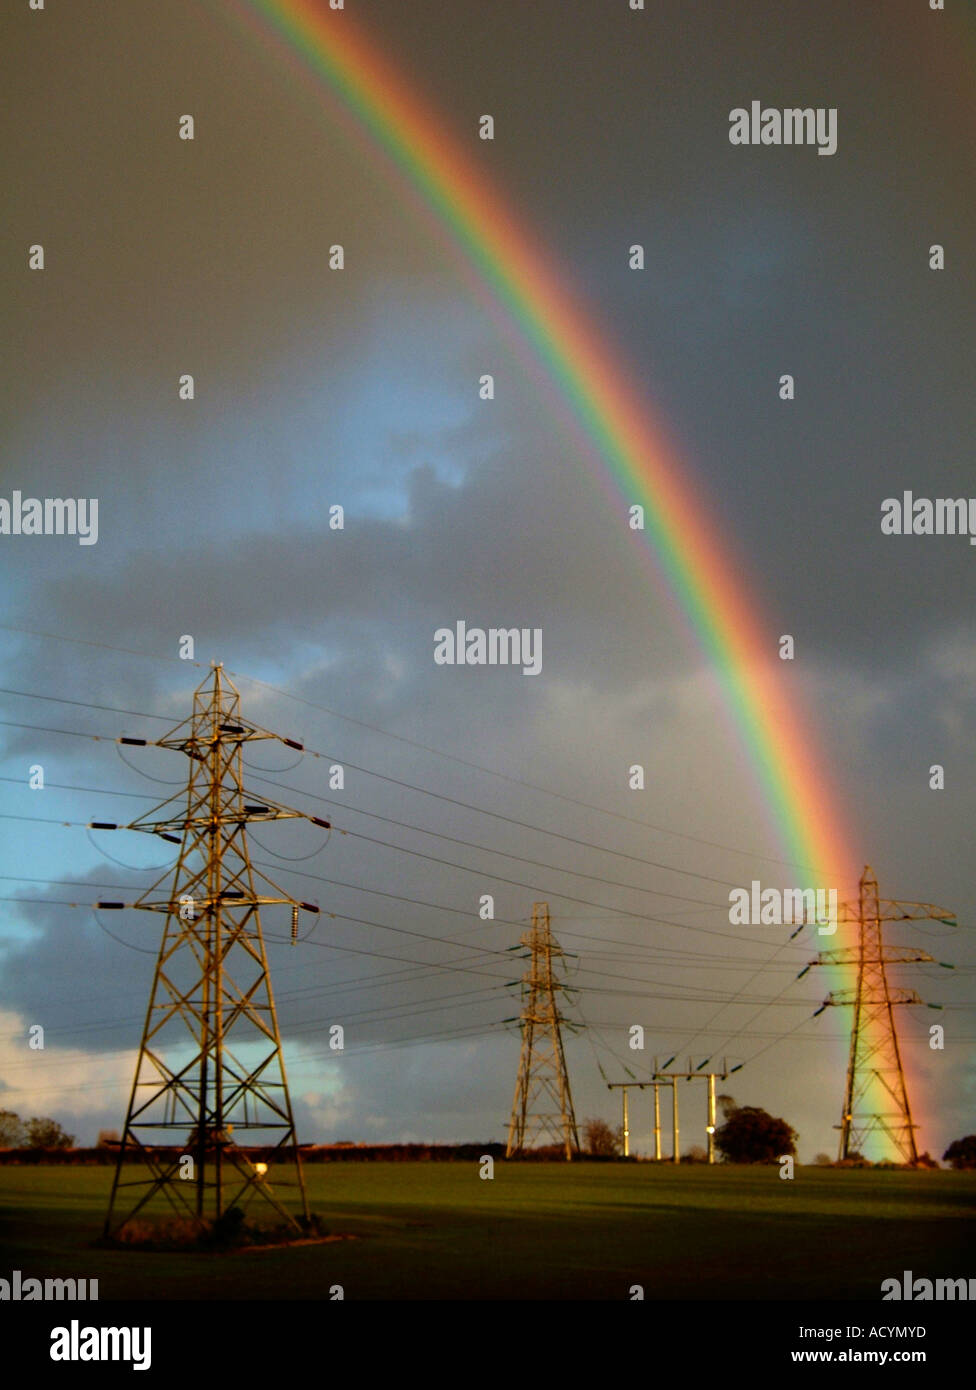 rainbow over electricity pylons Stock Photo